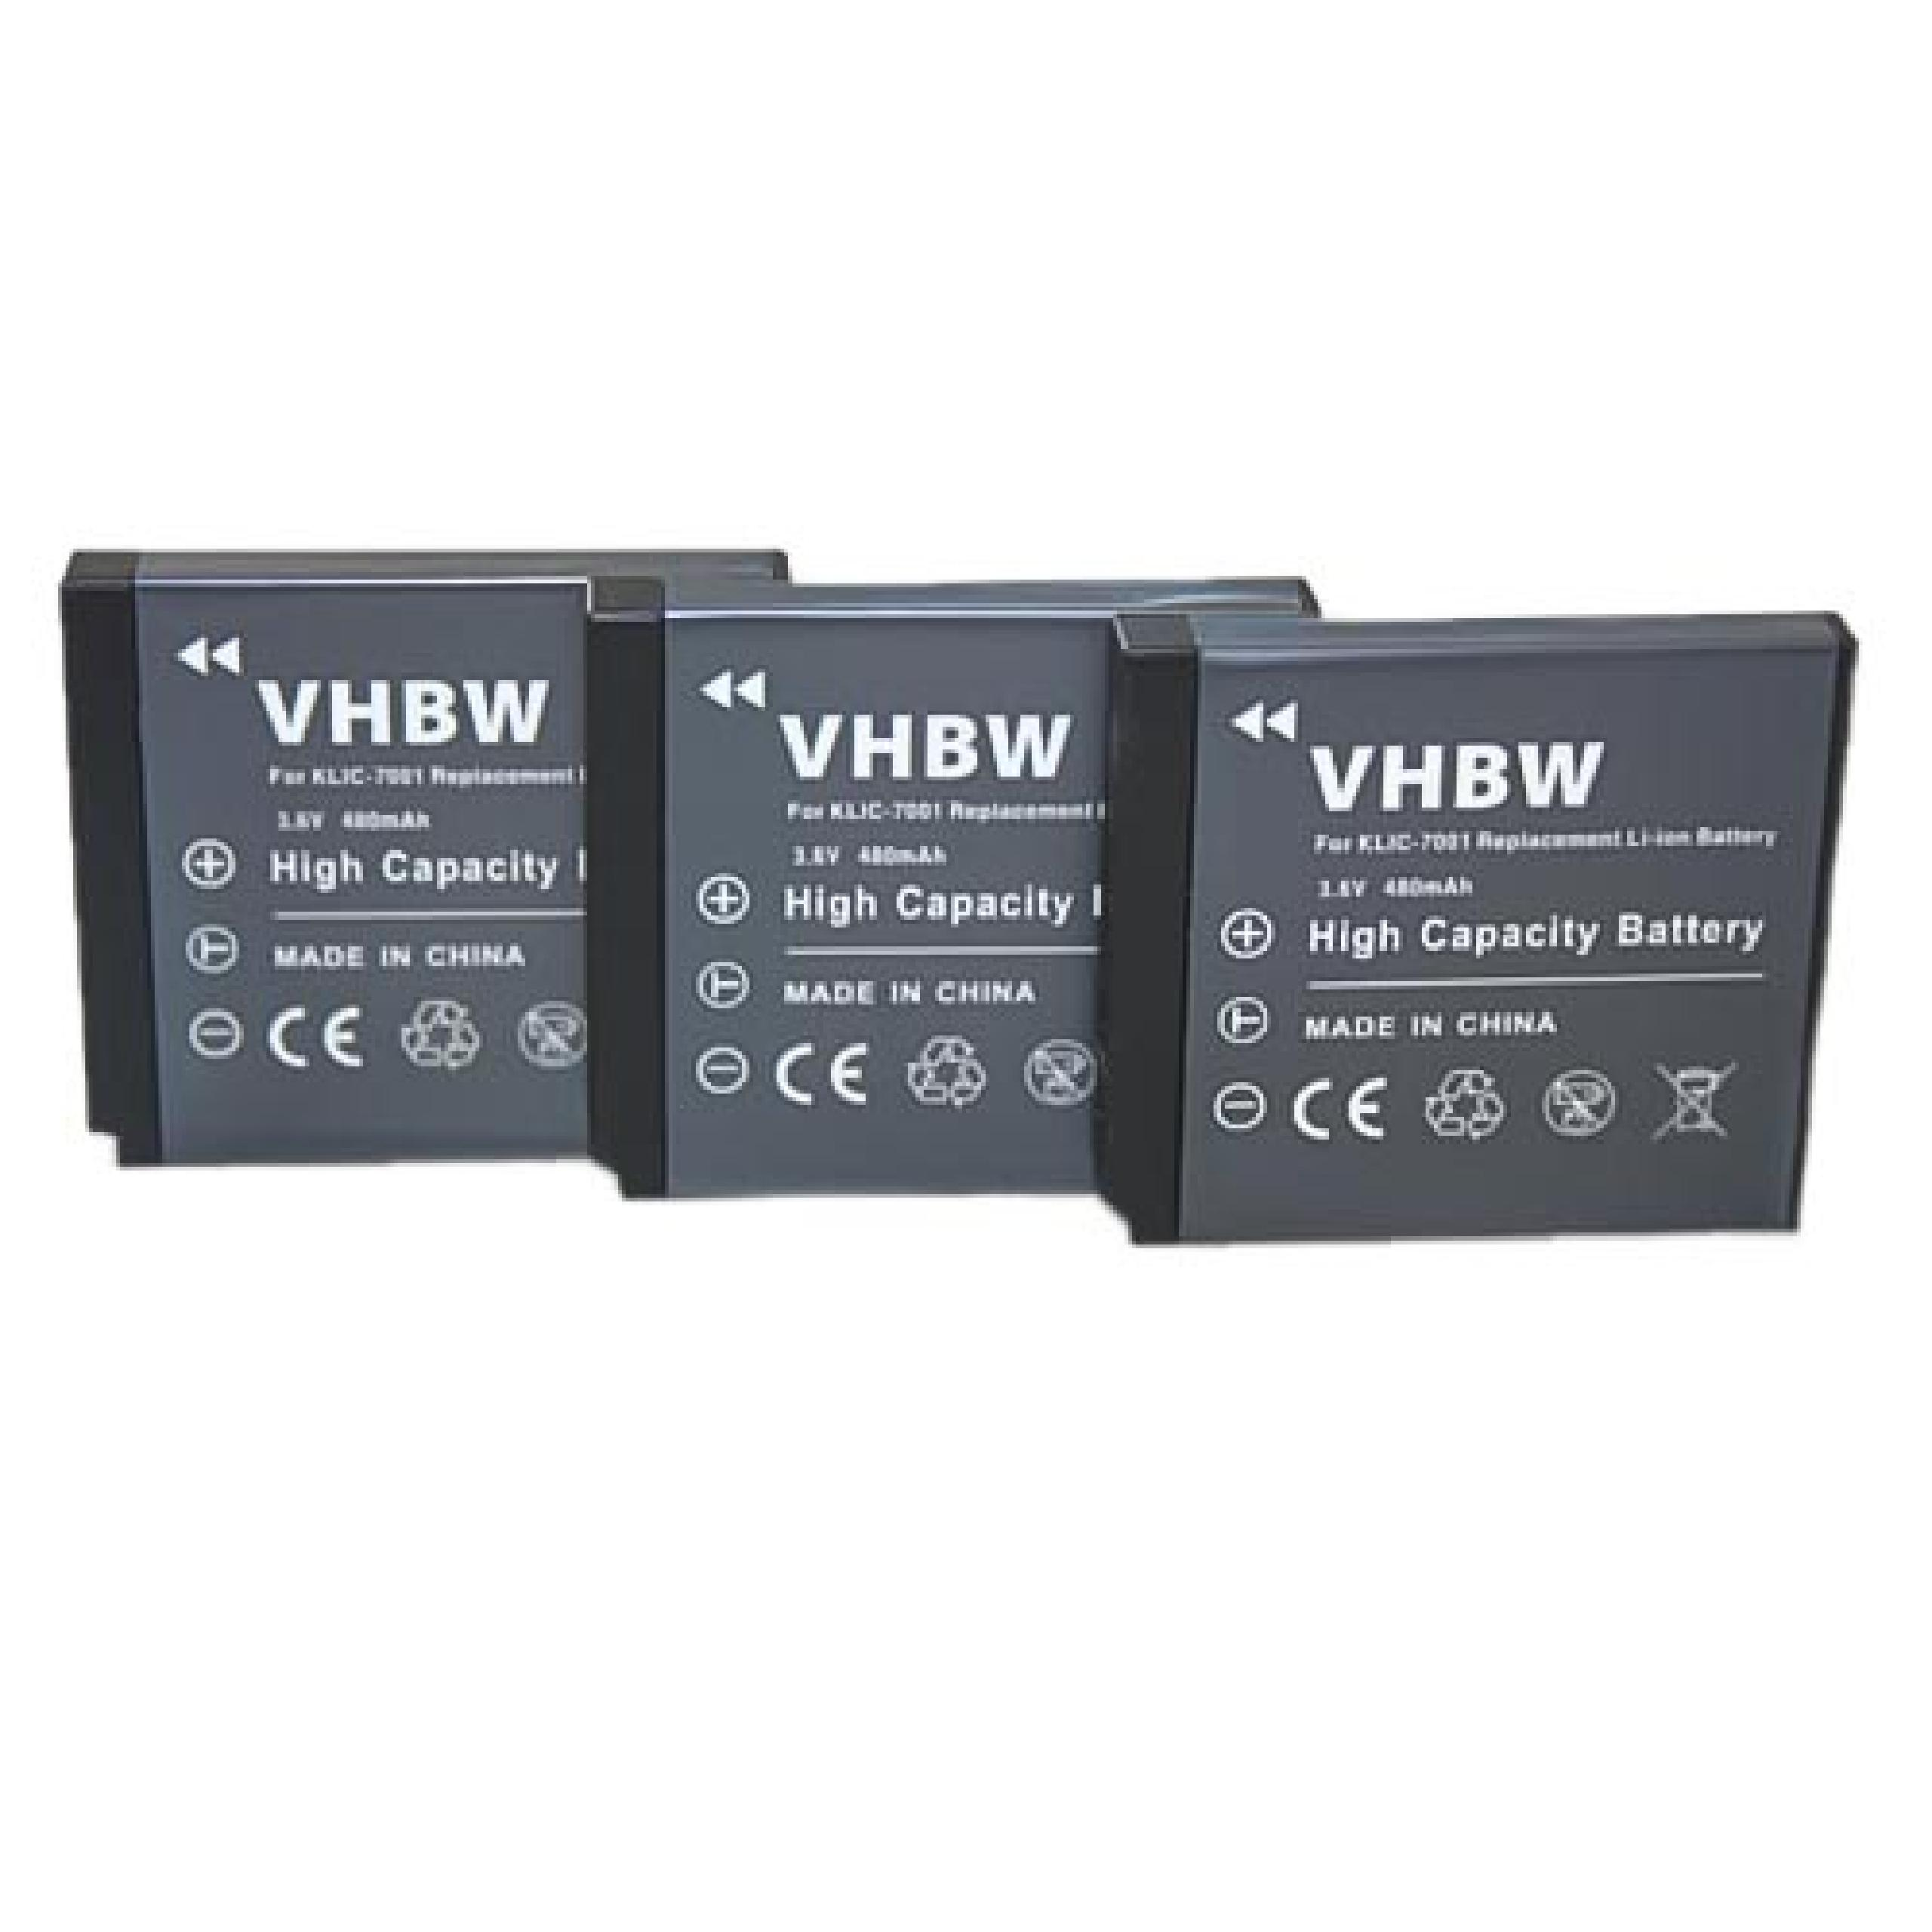 VHBW kompatibel DXG DXG-5C0, Rollei mit DXG-5C0V, DA101, - 650 3.6 Akku Kamera, 5C8VR, DXG-599V DXG-5C8V, Li-Ion DA-101, Volt